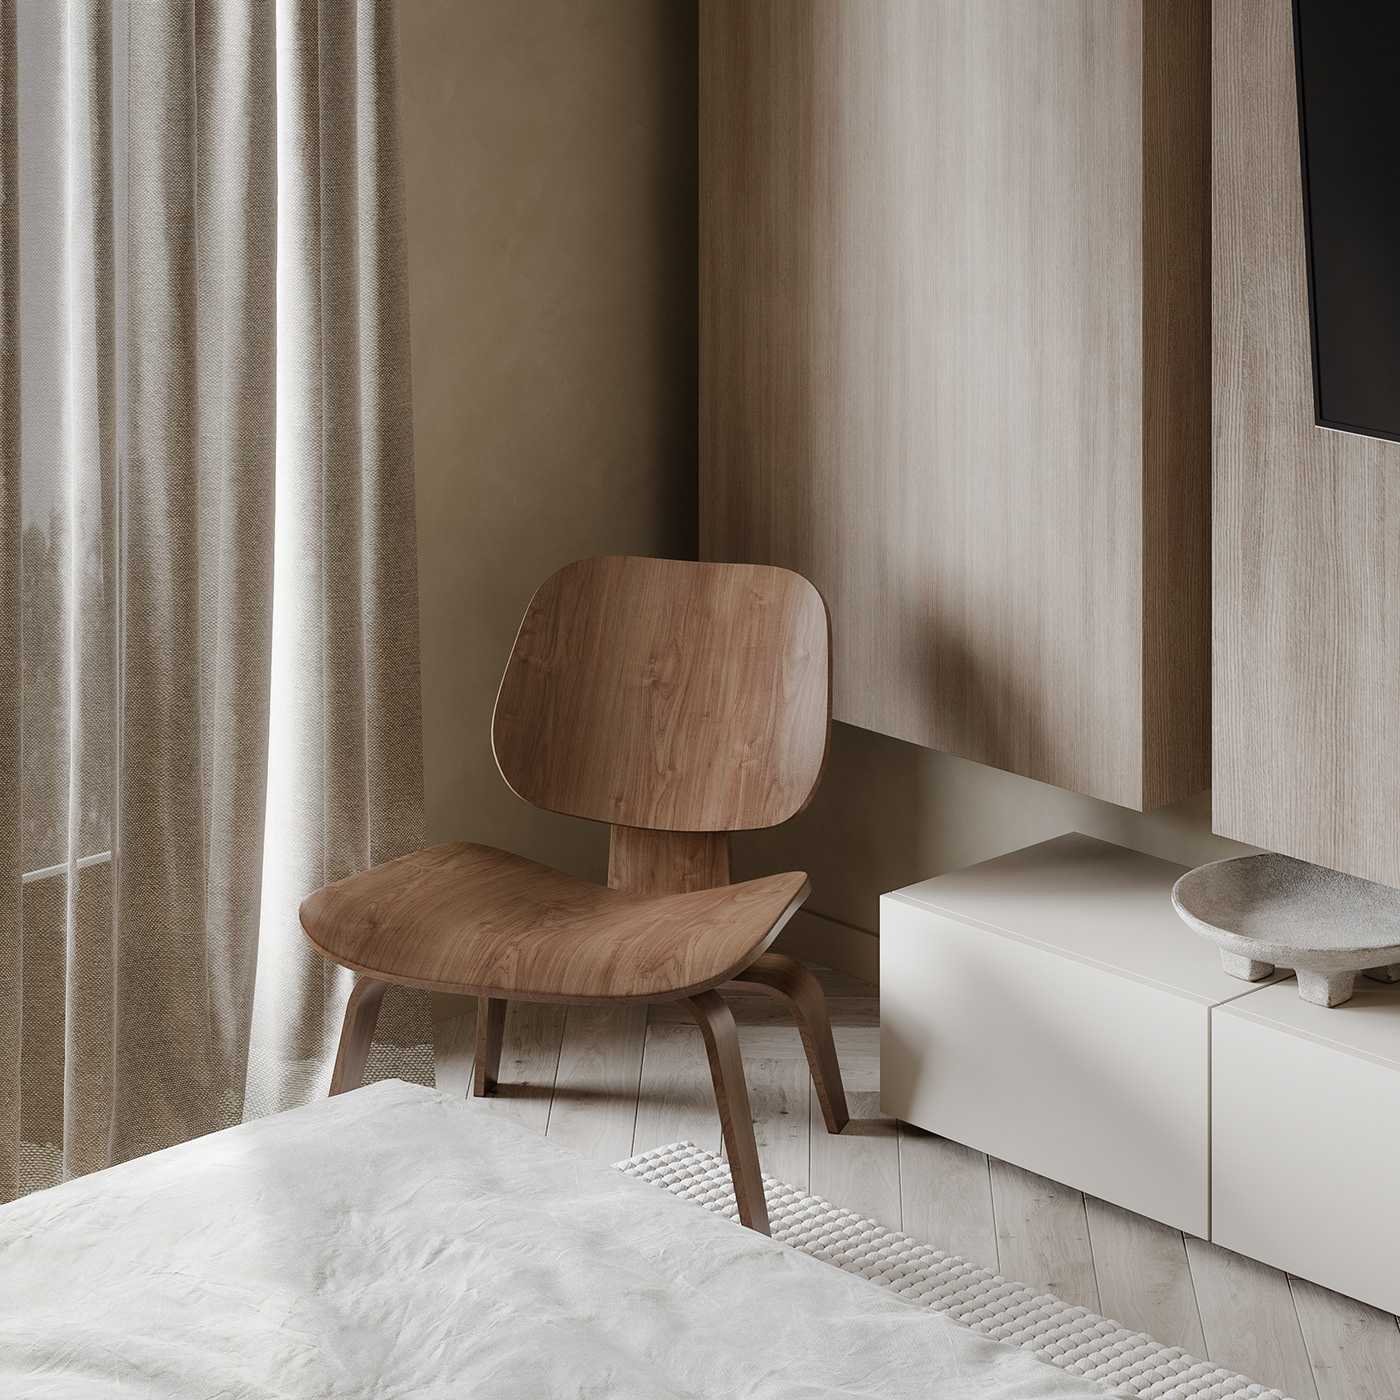 beige interior cozy interior Warm Tones minimaldesign Luxury Design Timeless Design redesign contemporary homemakeover homerenovation